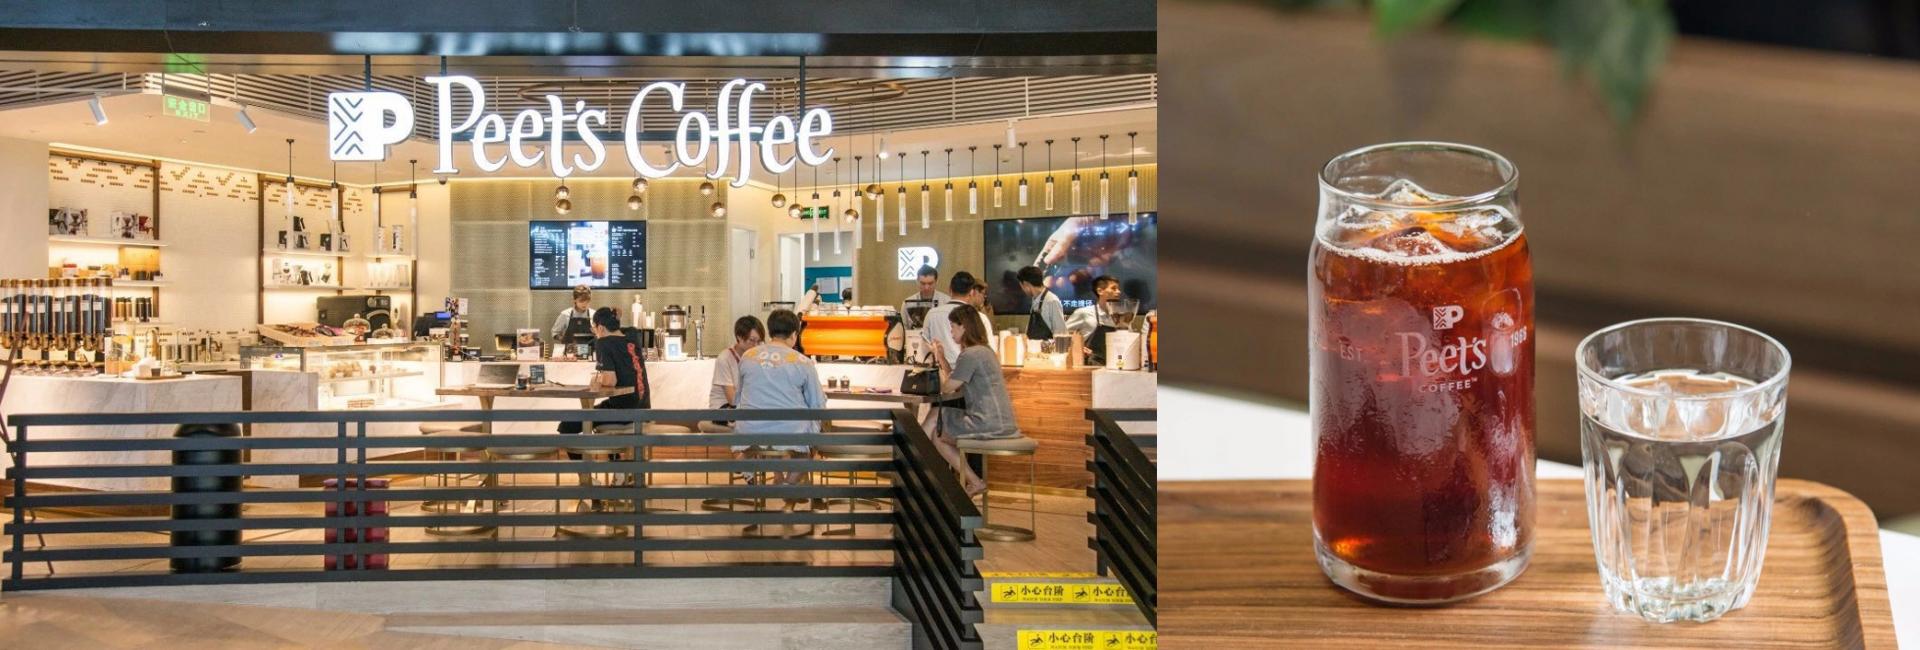 The Peet’s Coffee branding store in Jing’An district, Shanghai